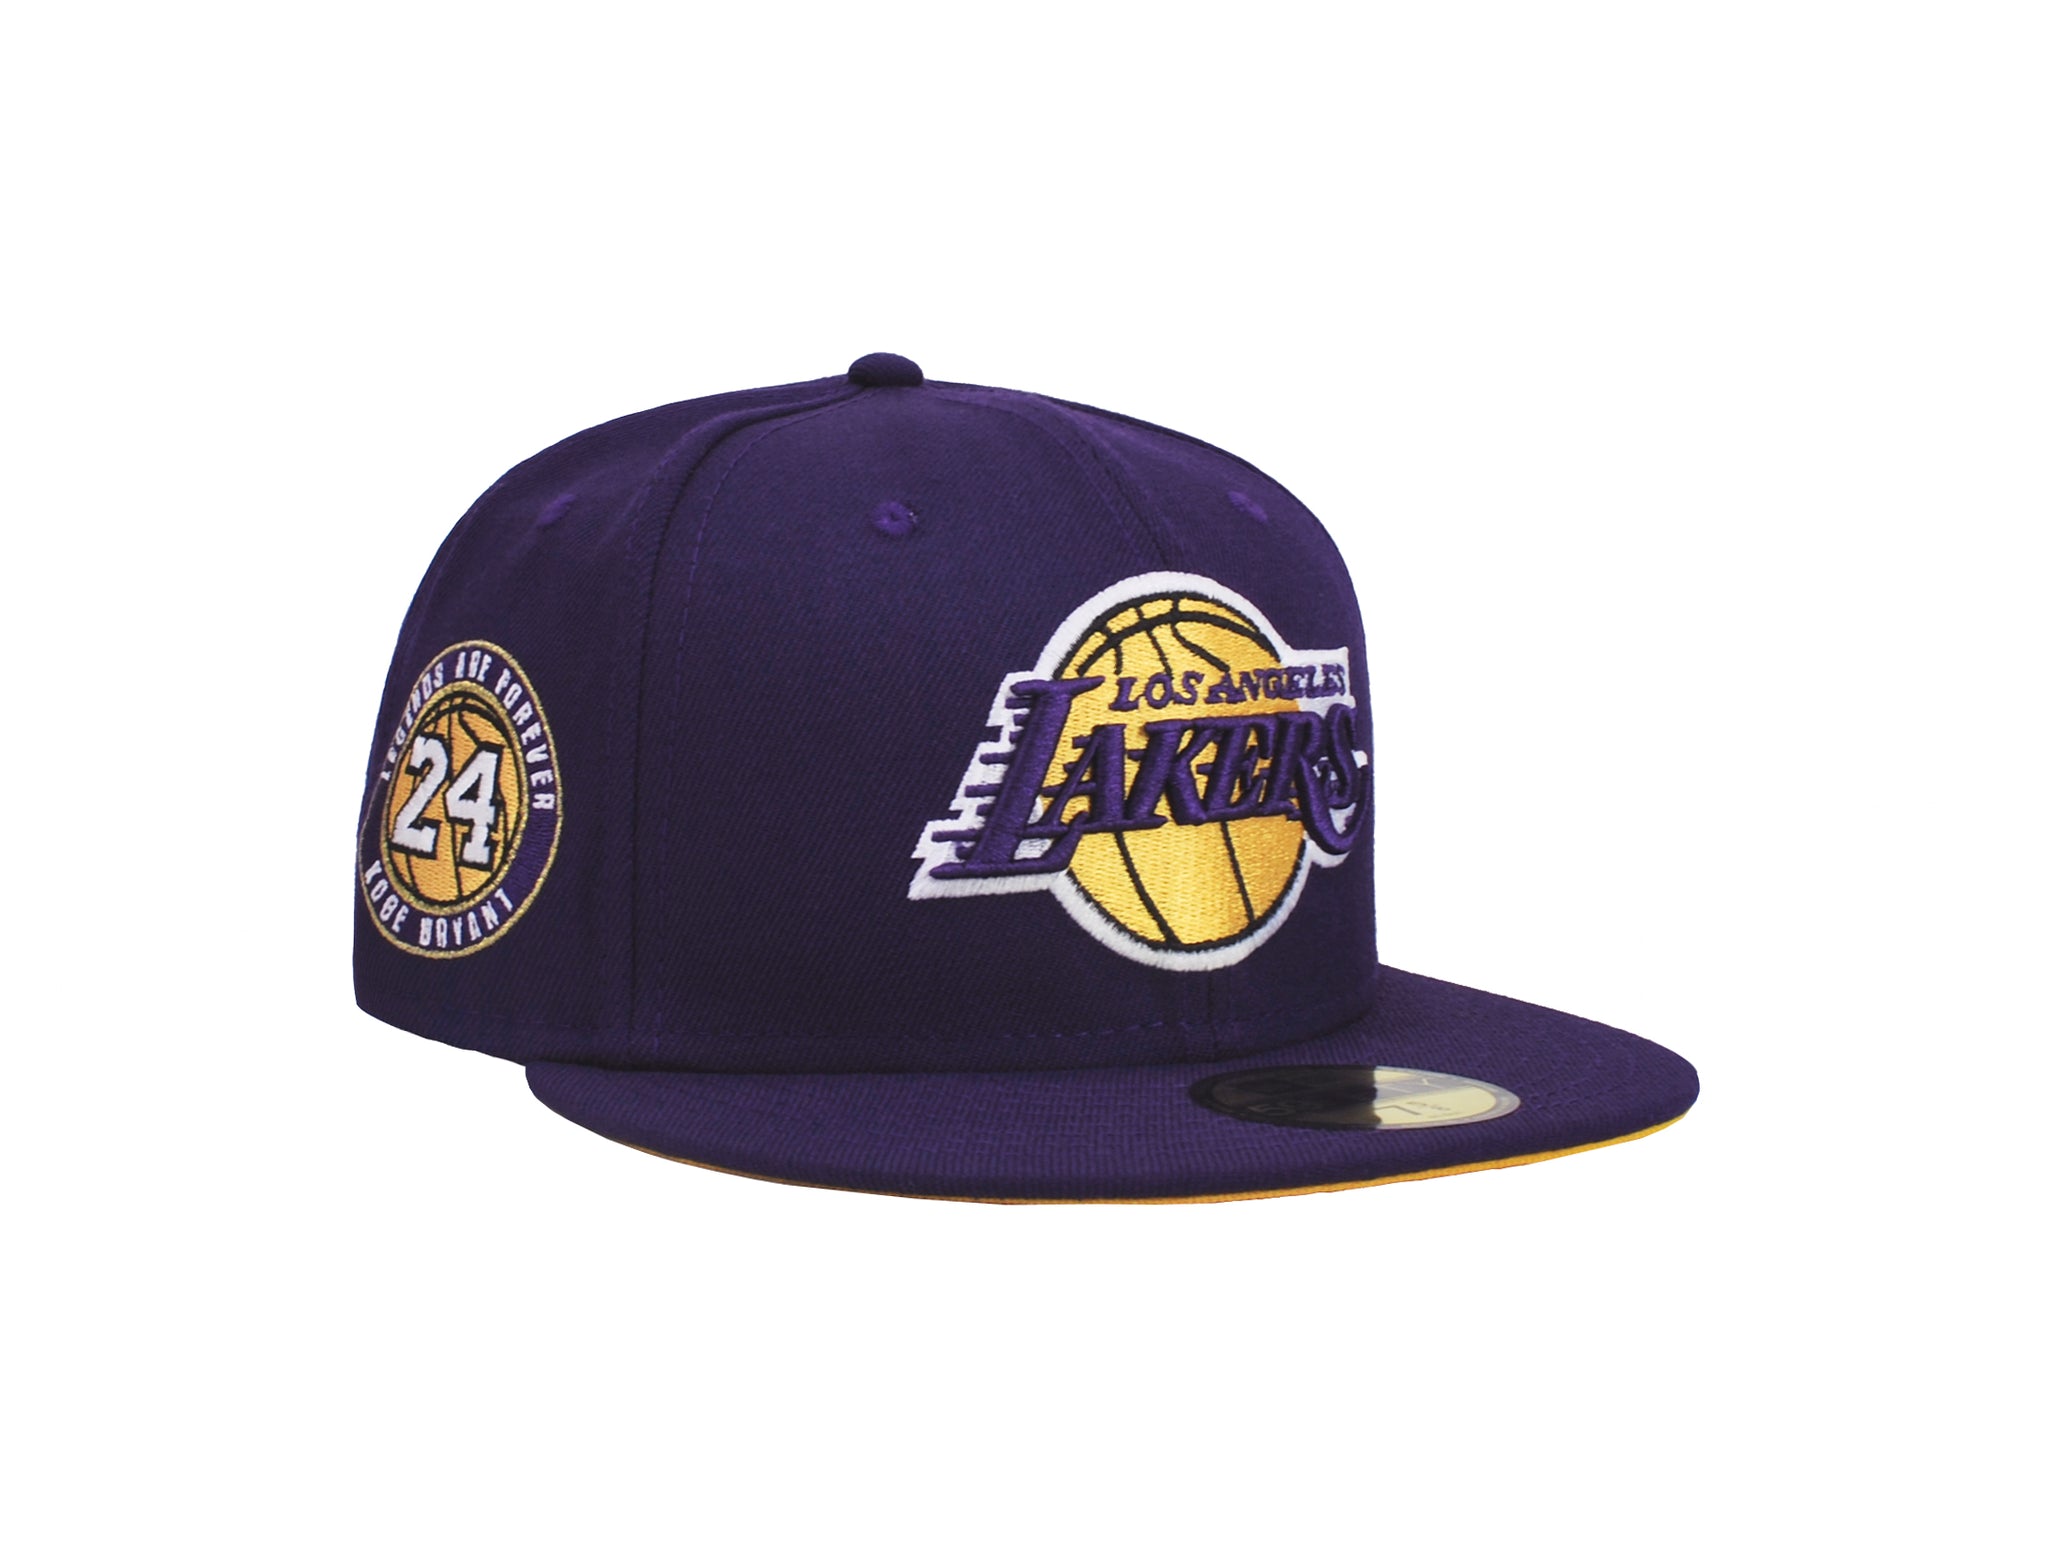 orra New Era Cap 5950 Los Angeles Lakers Kobe Bryant 59FIFTY Purple morado  Jersey PP 24 Retirement Gorras y Complementos New Era